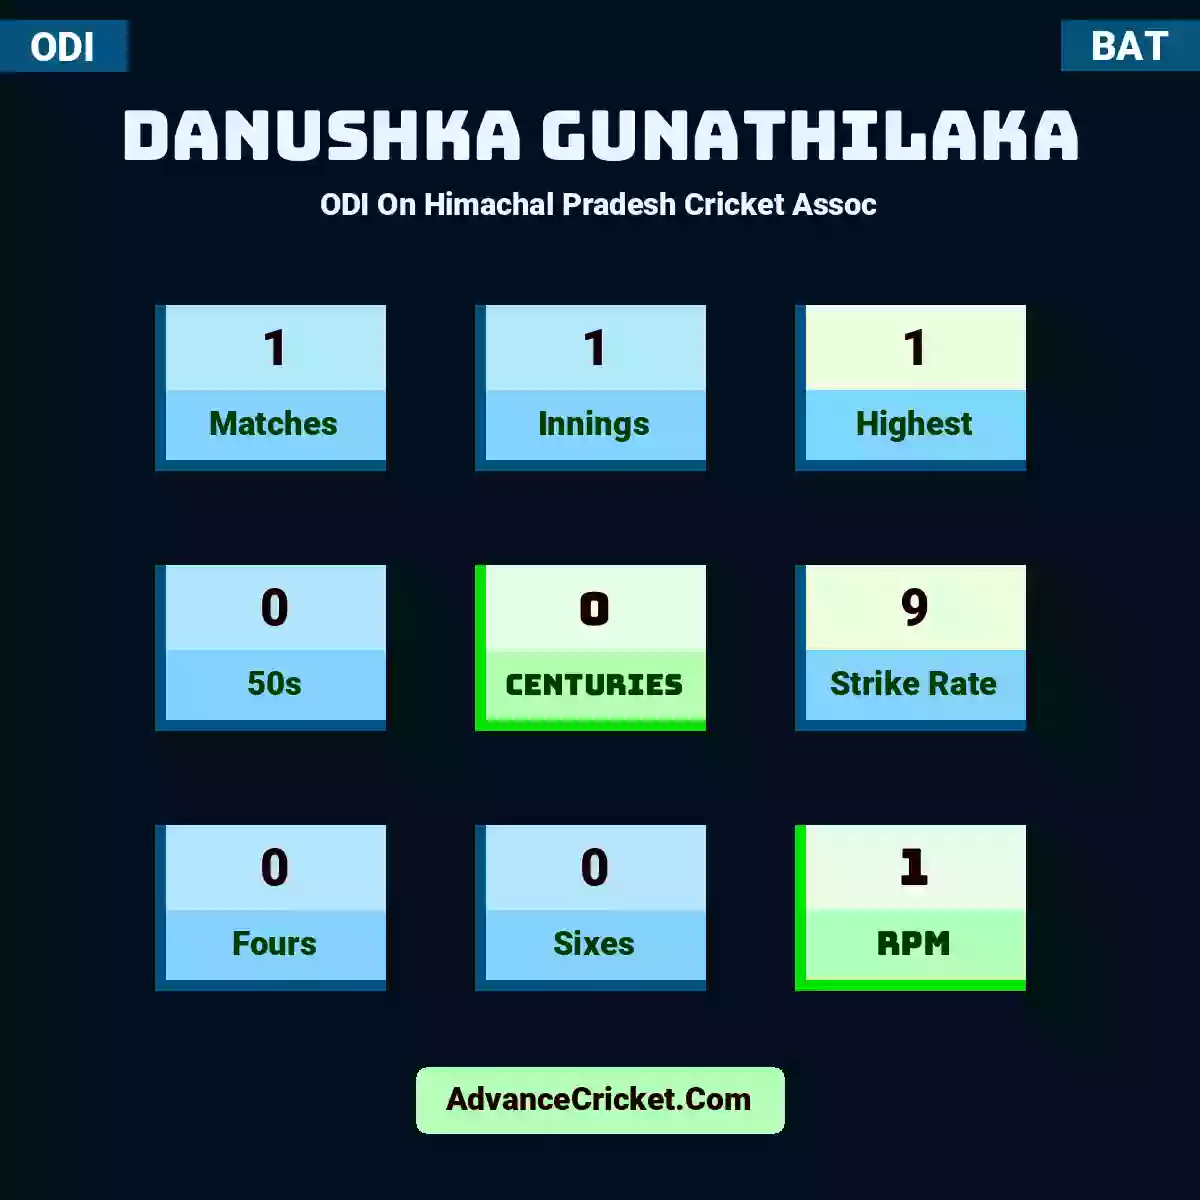 Danushka Gunathilaka ODI  On Himachal Pradesh Cricket Assoc, Danushka Gunathilaka played 1 matches, scored 1 runs as highest, 0 half-centuries, and 0 centuries, with a strike rate of 9. D.Gunathilaka hit 0 fours and 0 sixes, with an RPM of 1.